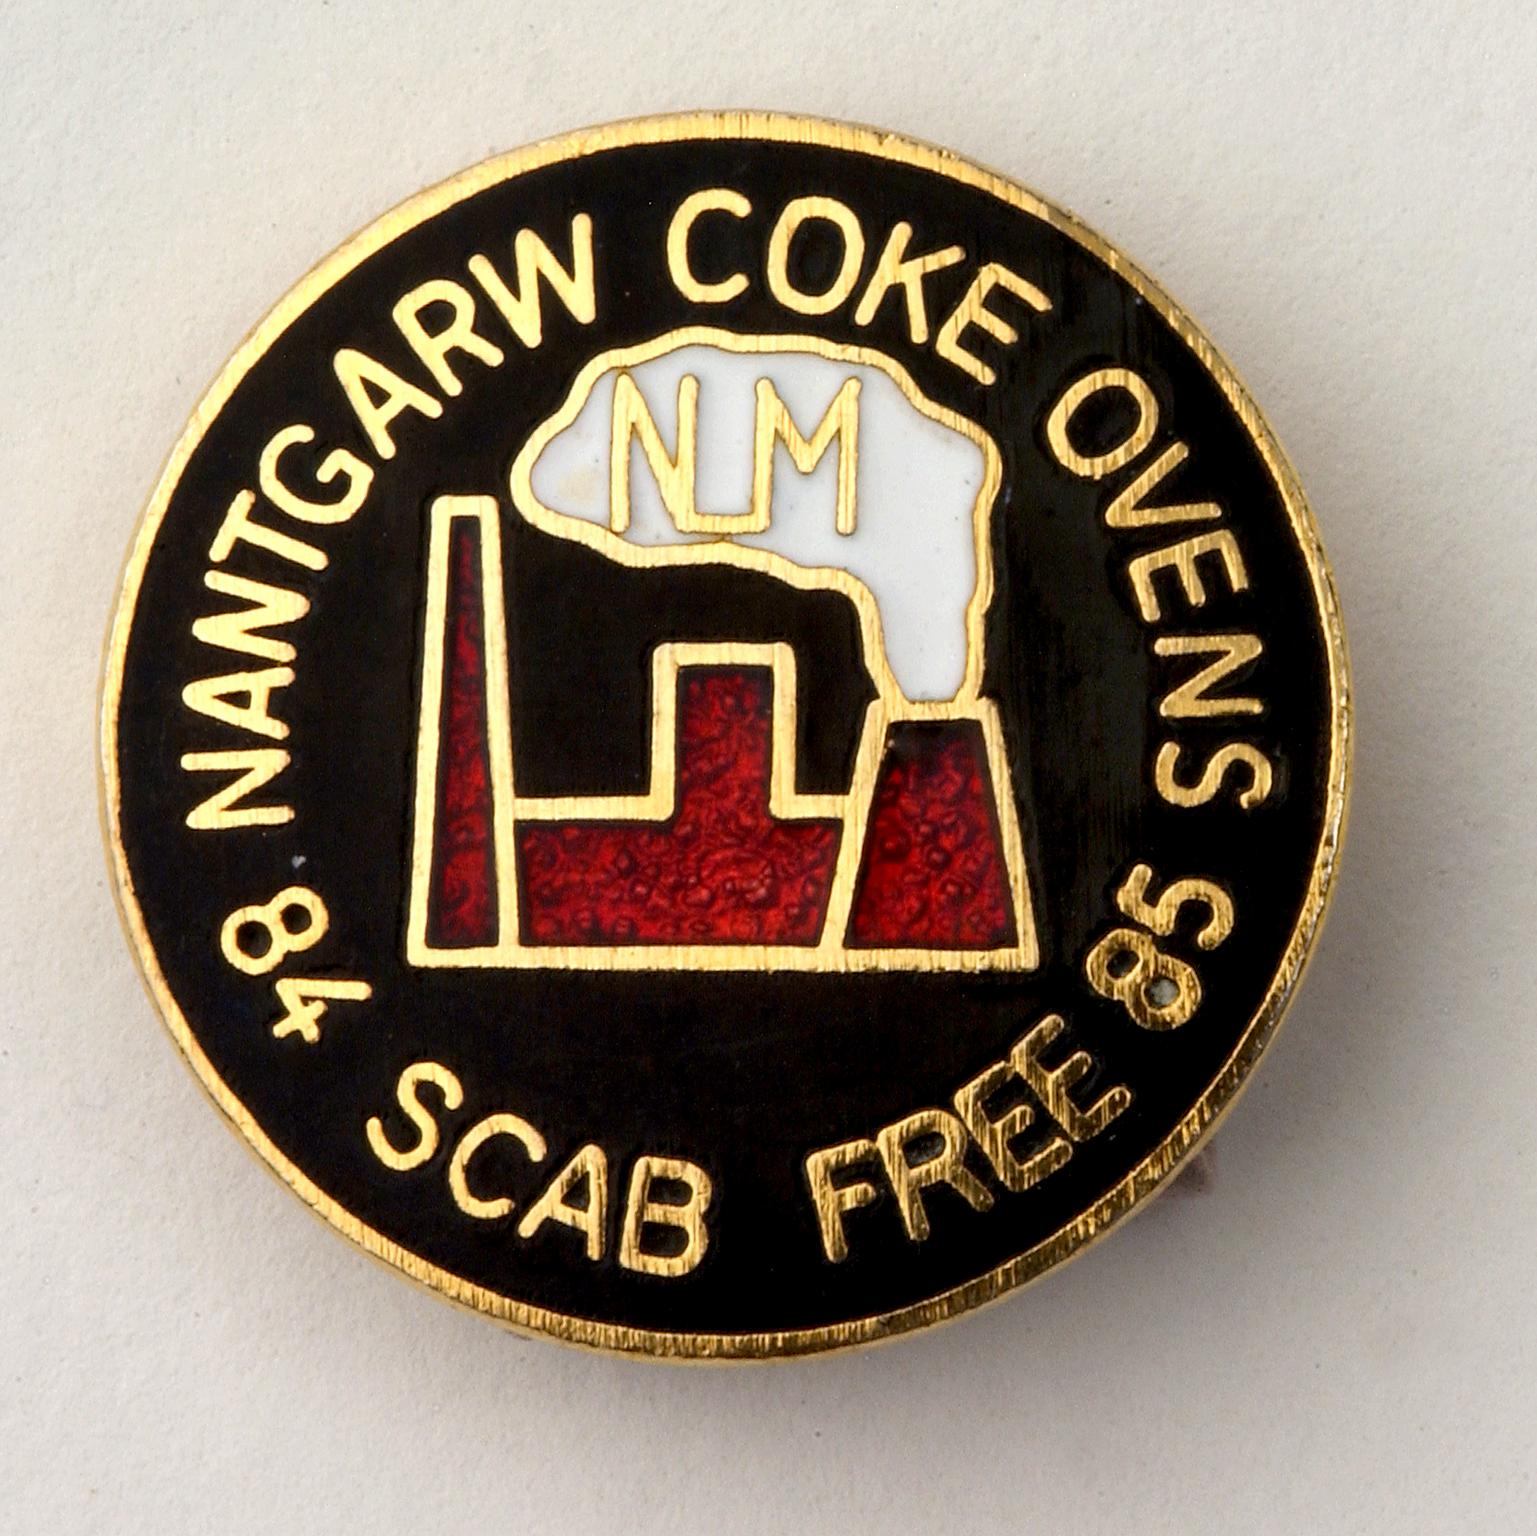 Nantgarw Coke Ovens 84-85 Scab Free, badge